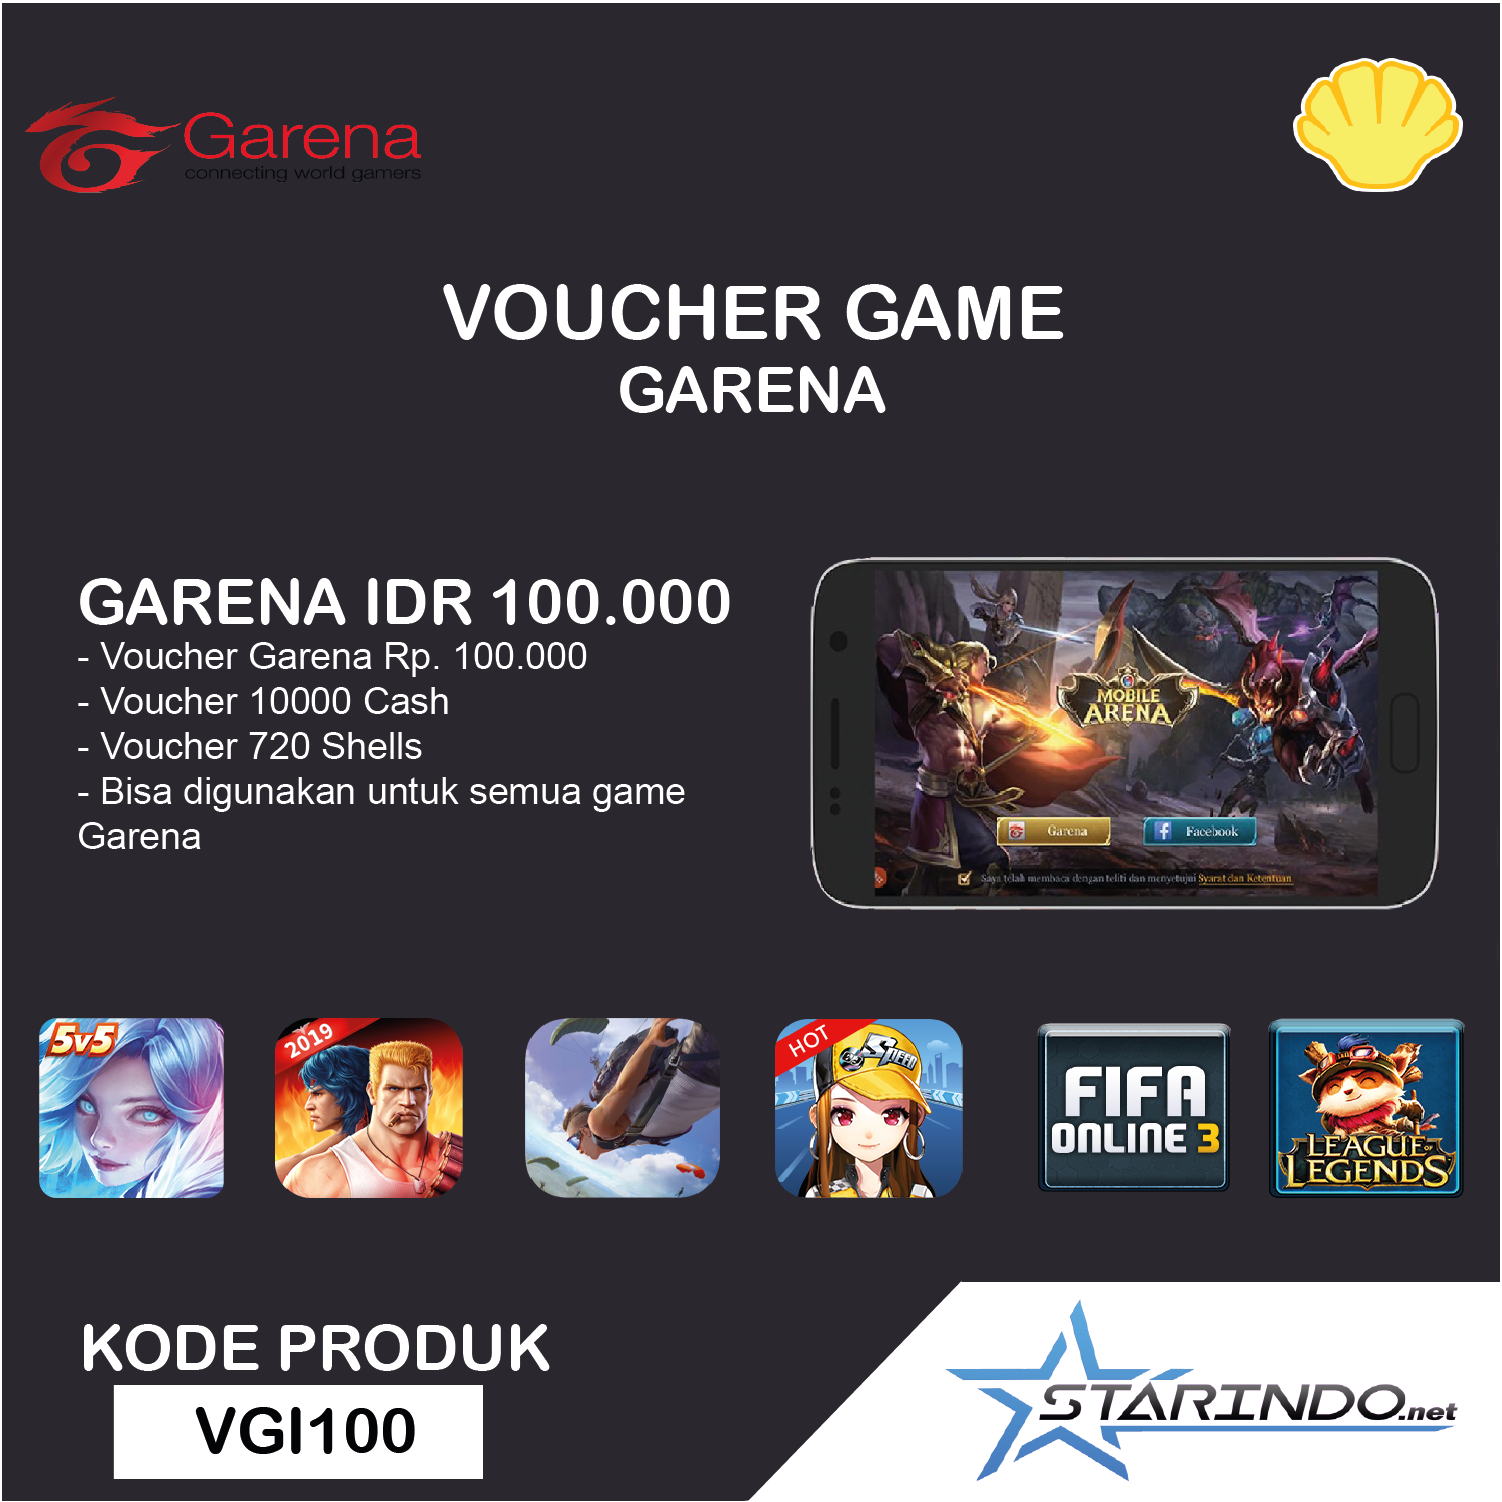 Voucher Game Garena - 330 Shell